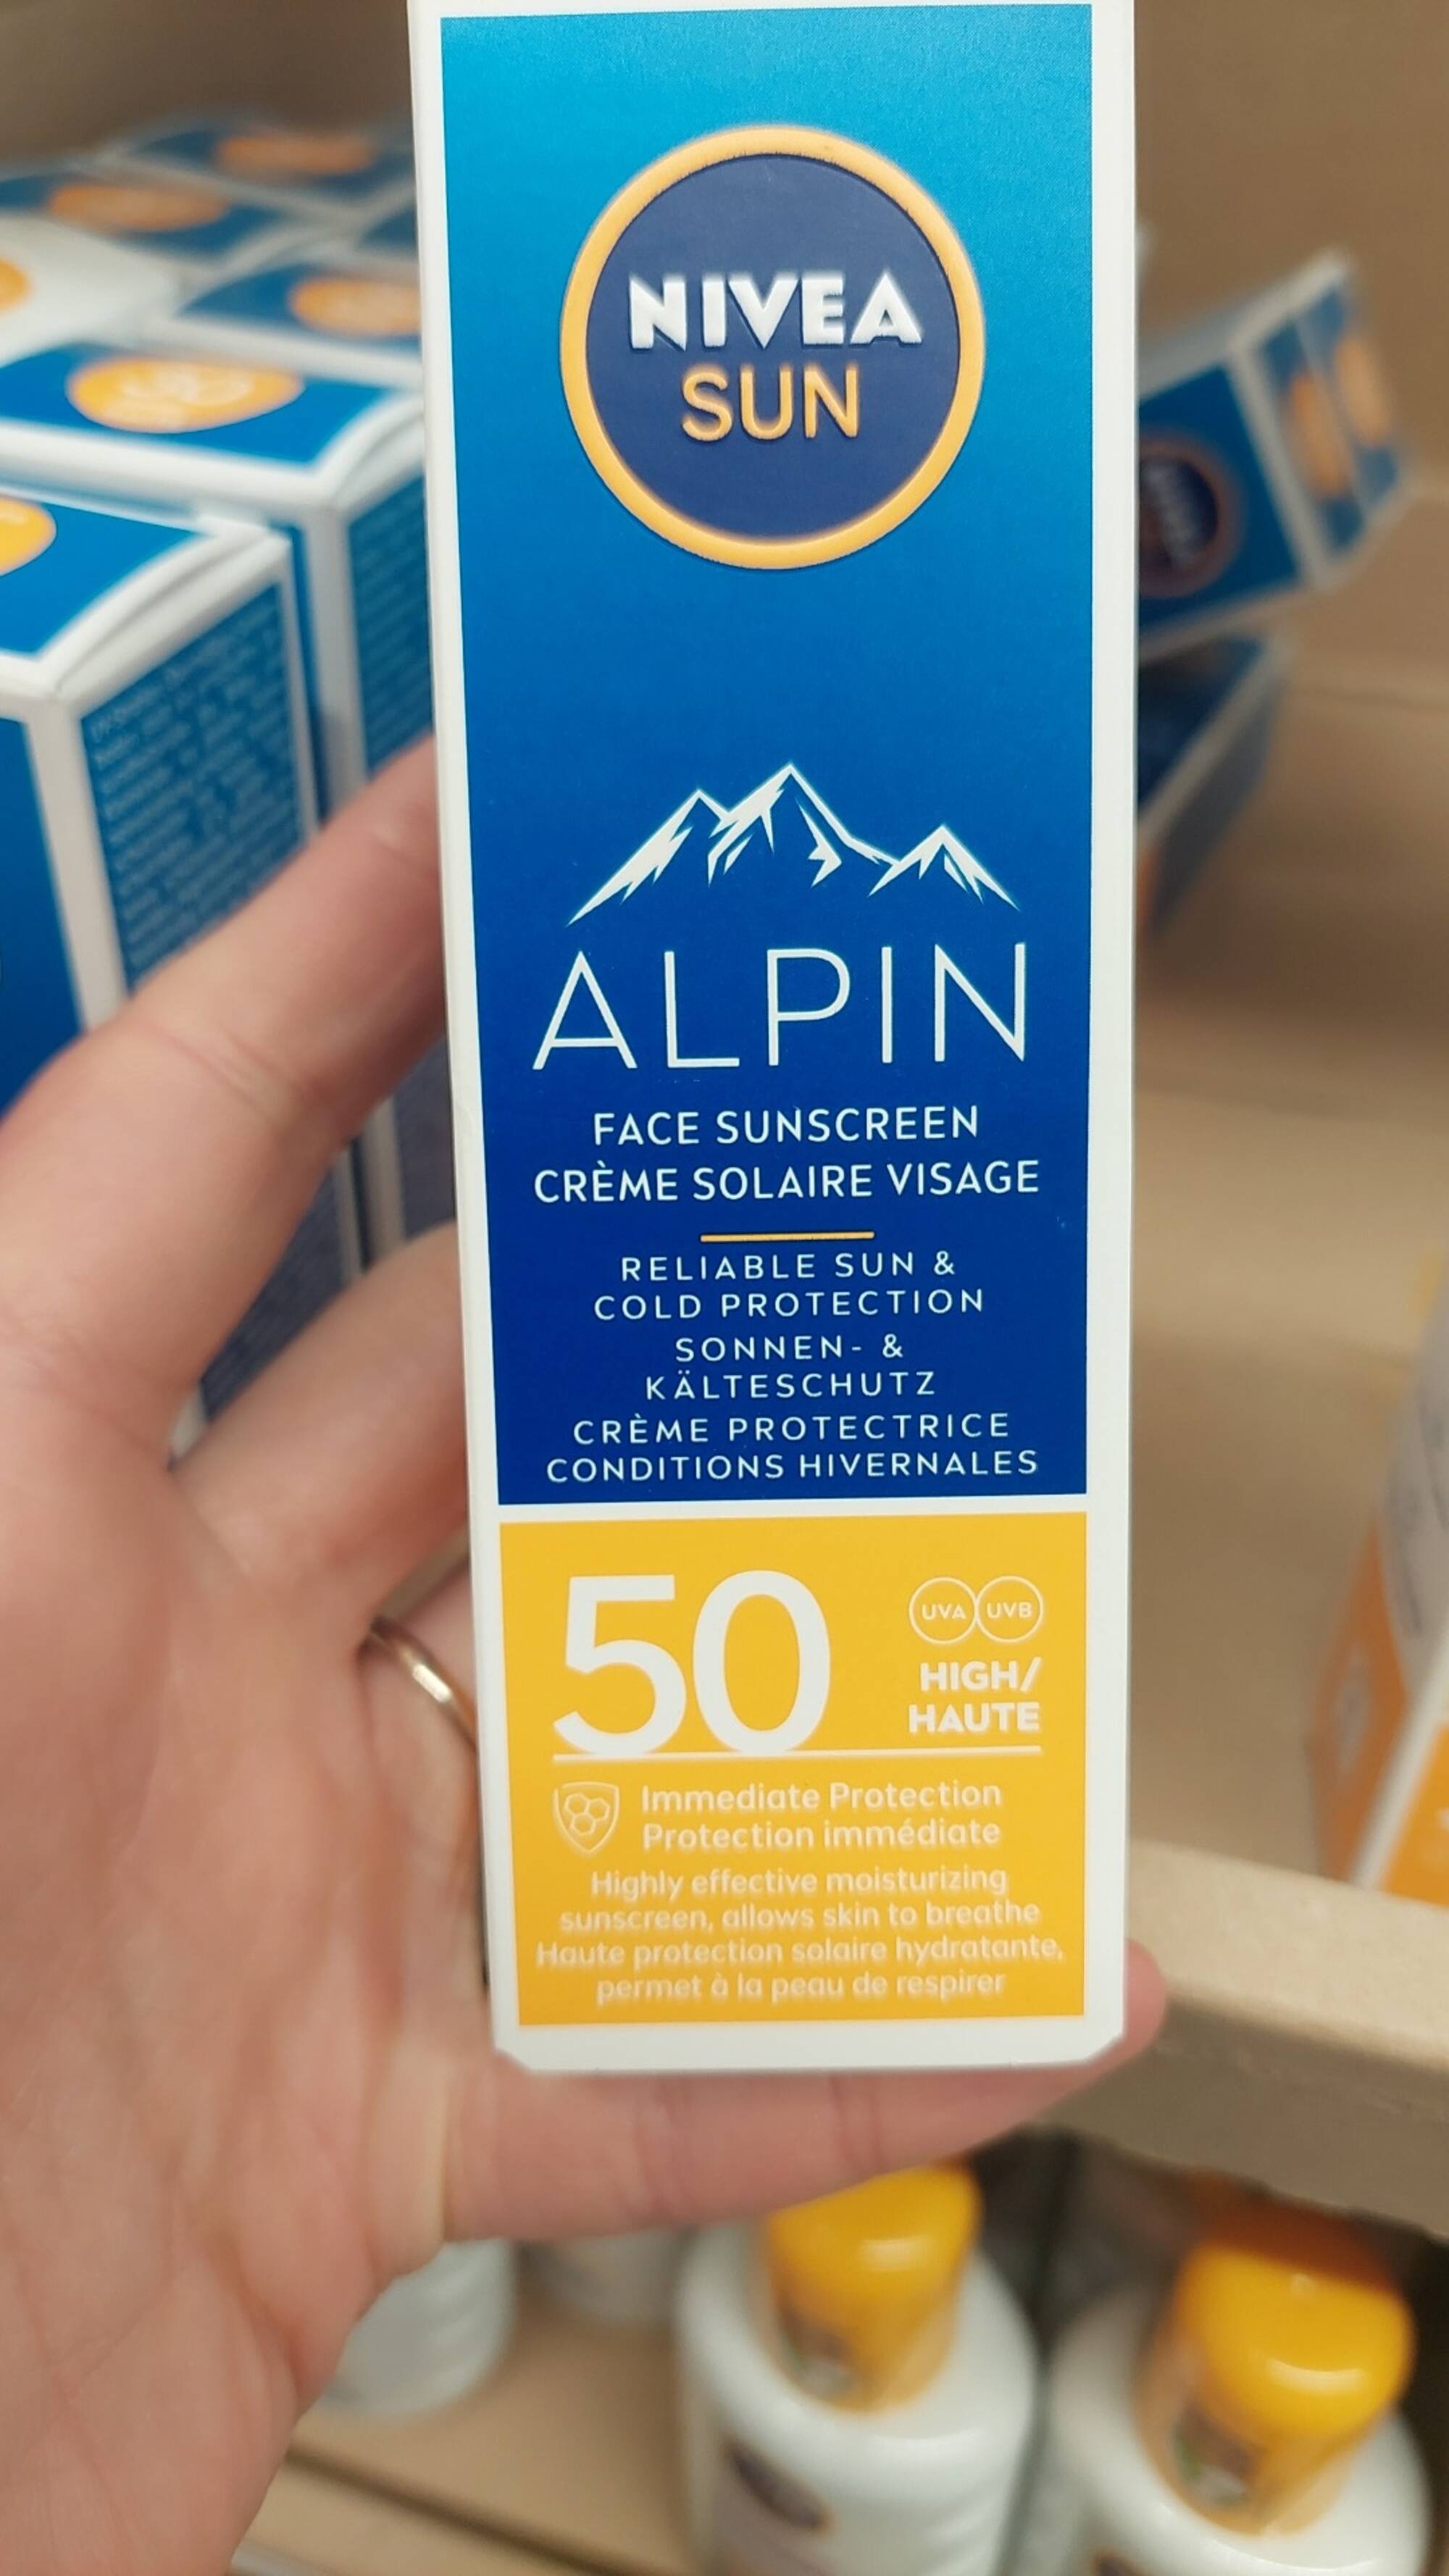 NIVEA SUN - Alpin - Crème solaire visage spf 50